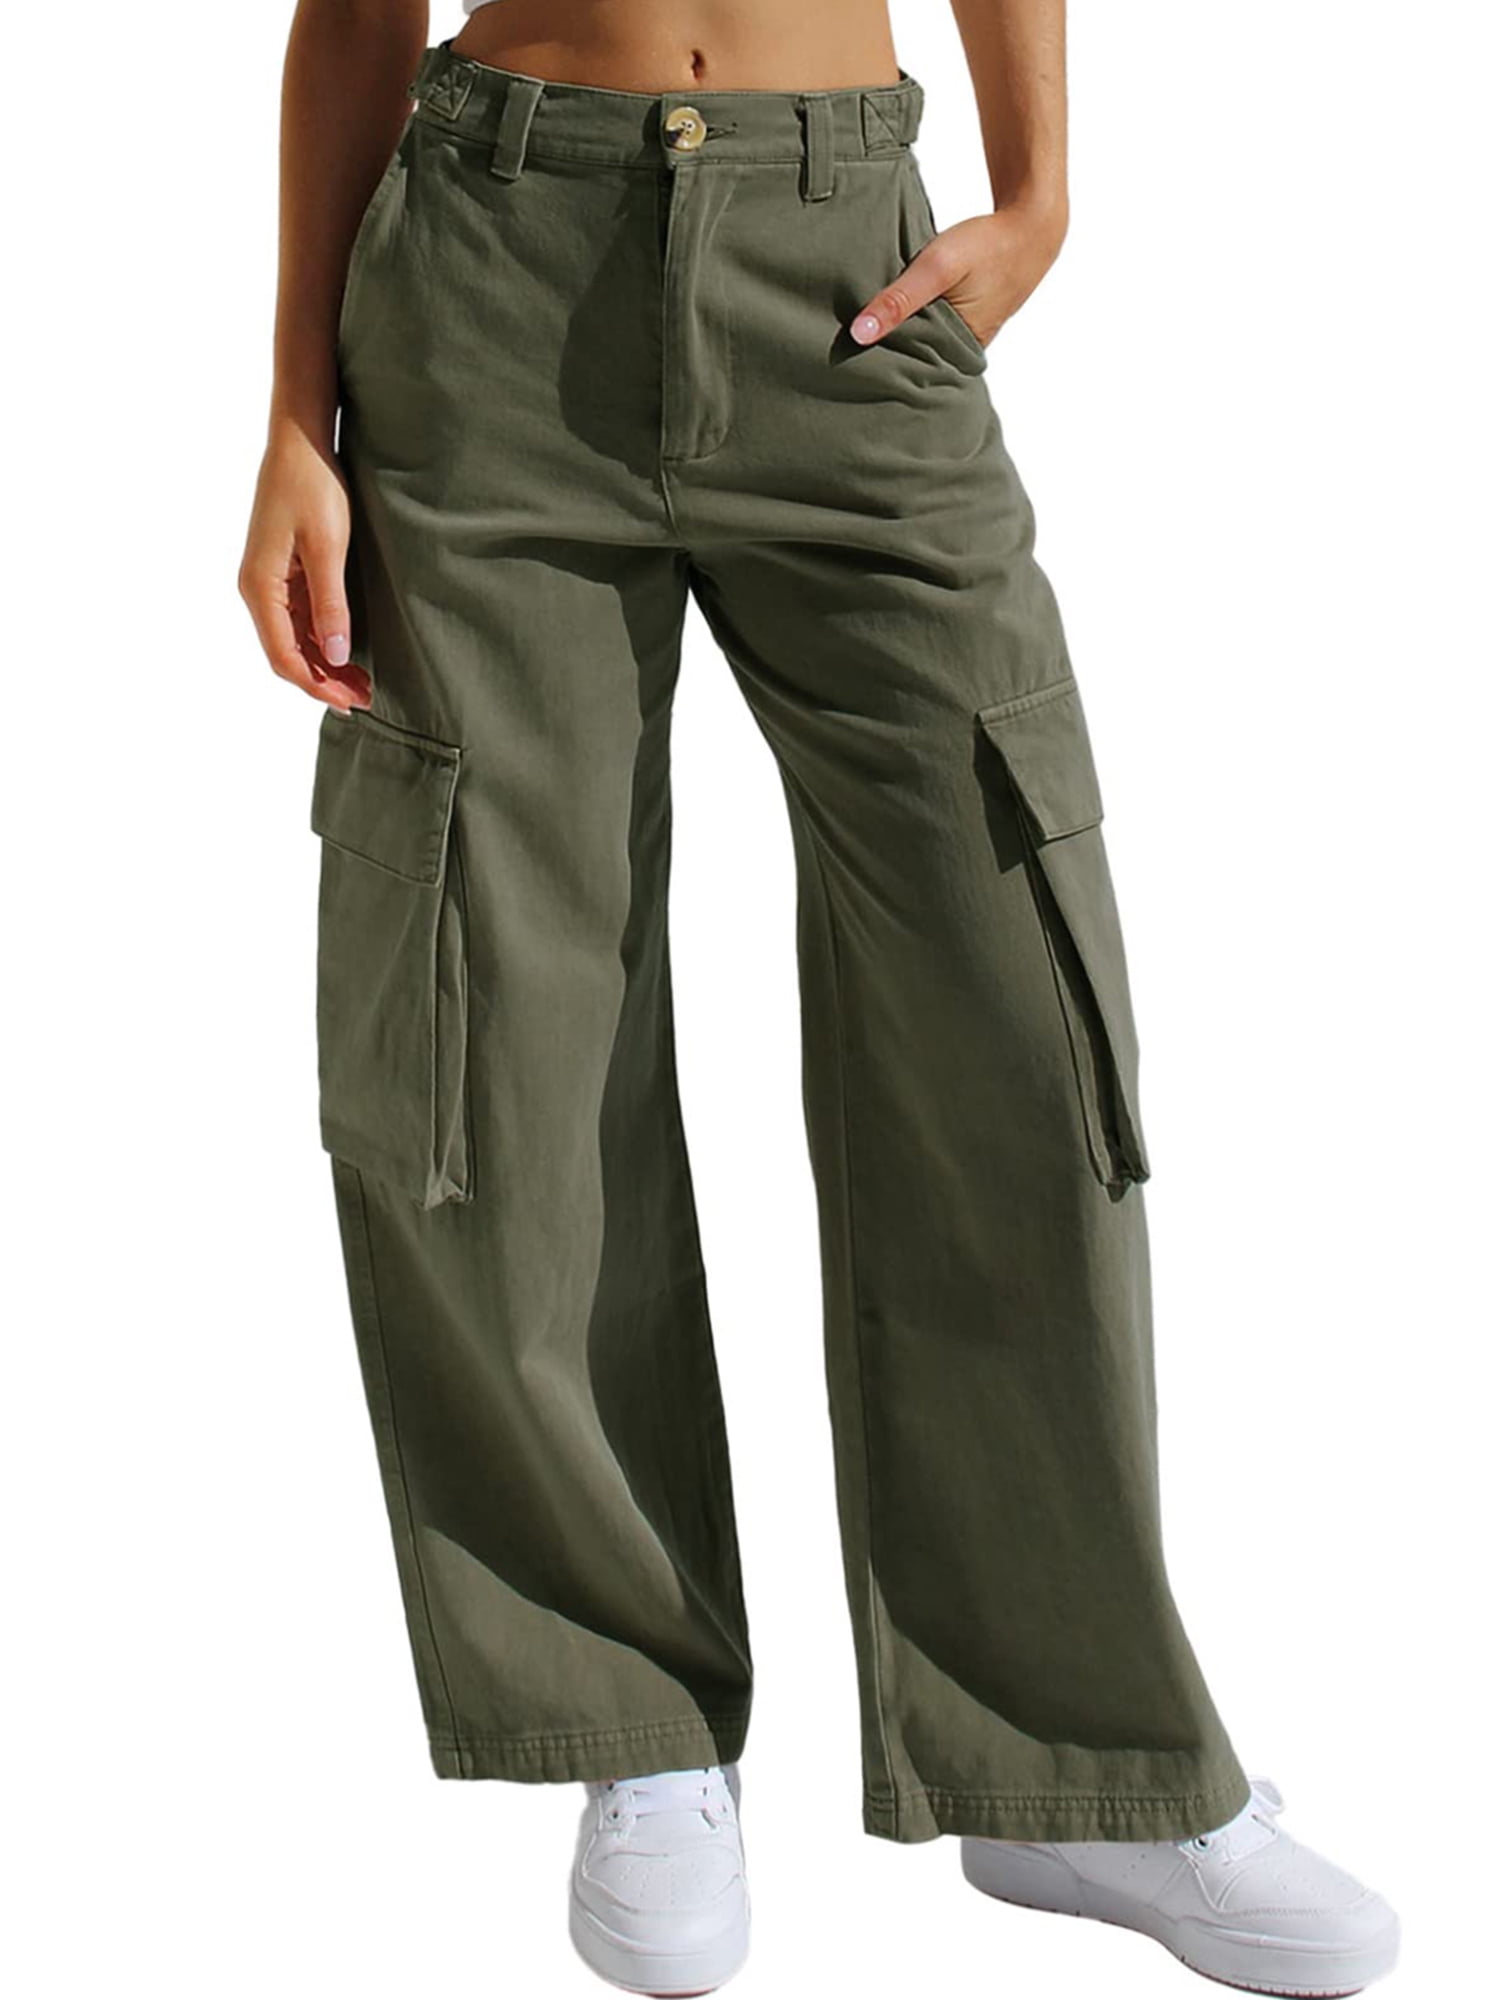 Peyakidsaa Women's Casual Cargo Trousers Solid Wide Leg Joggers Pockets  Cargo Pants